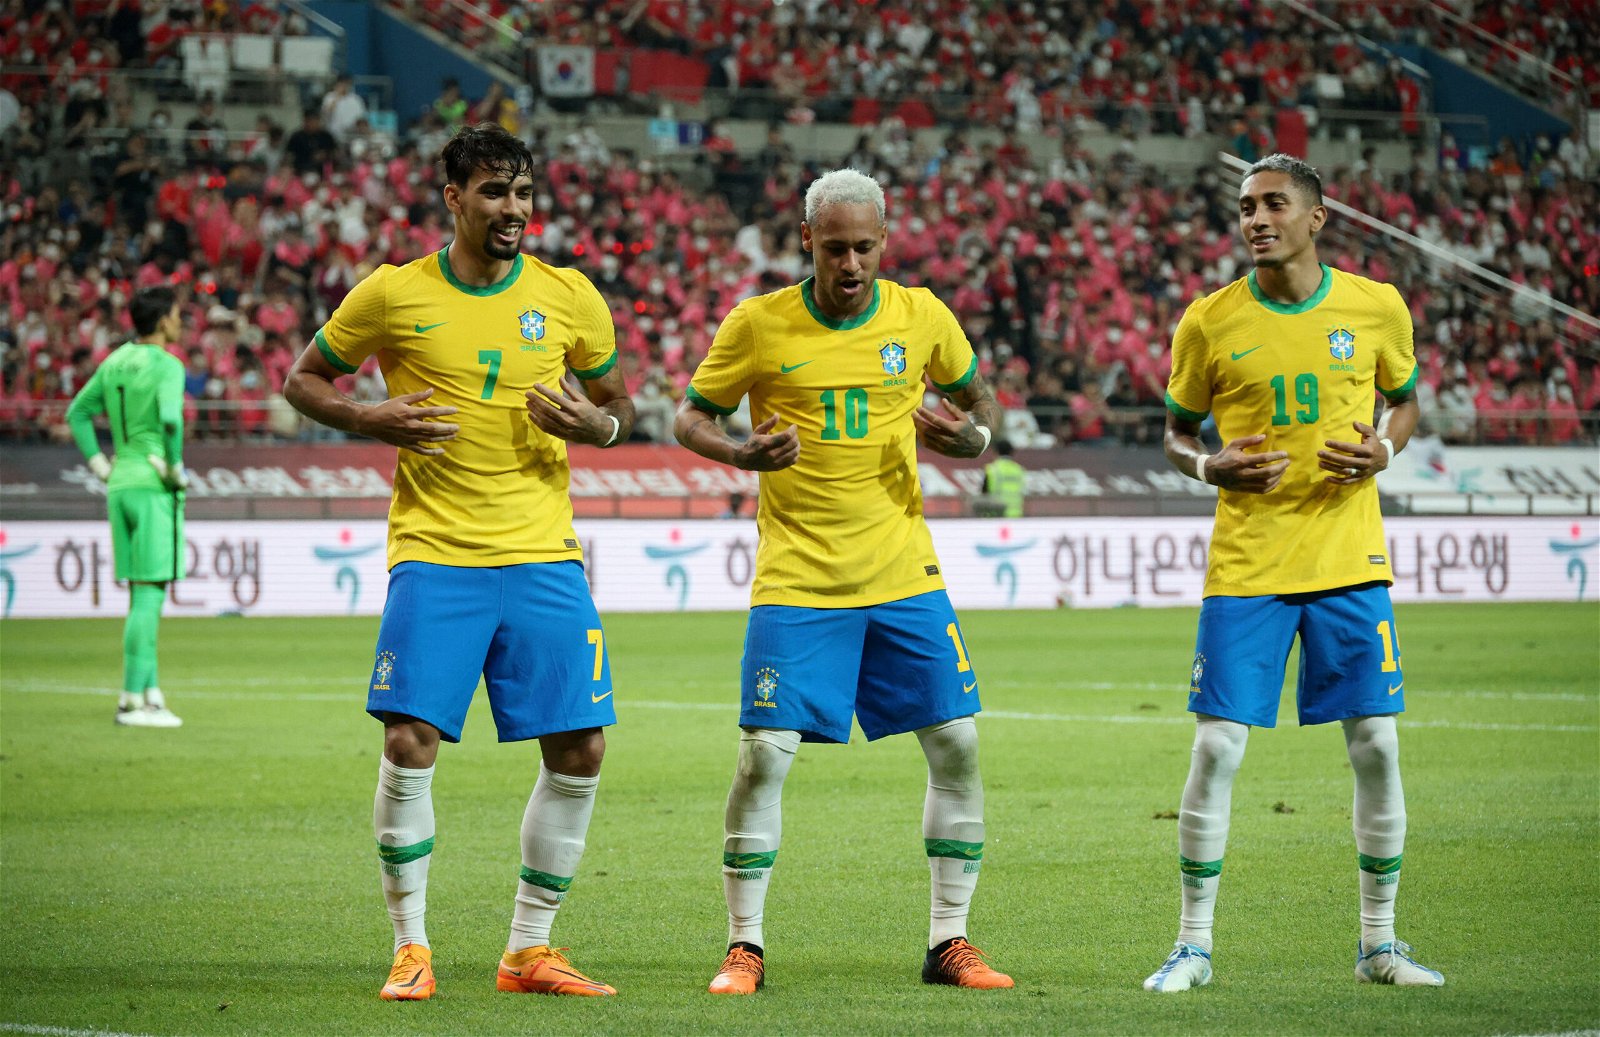 brazil vs switzerland - photo #10